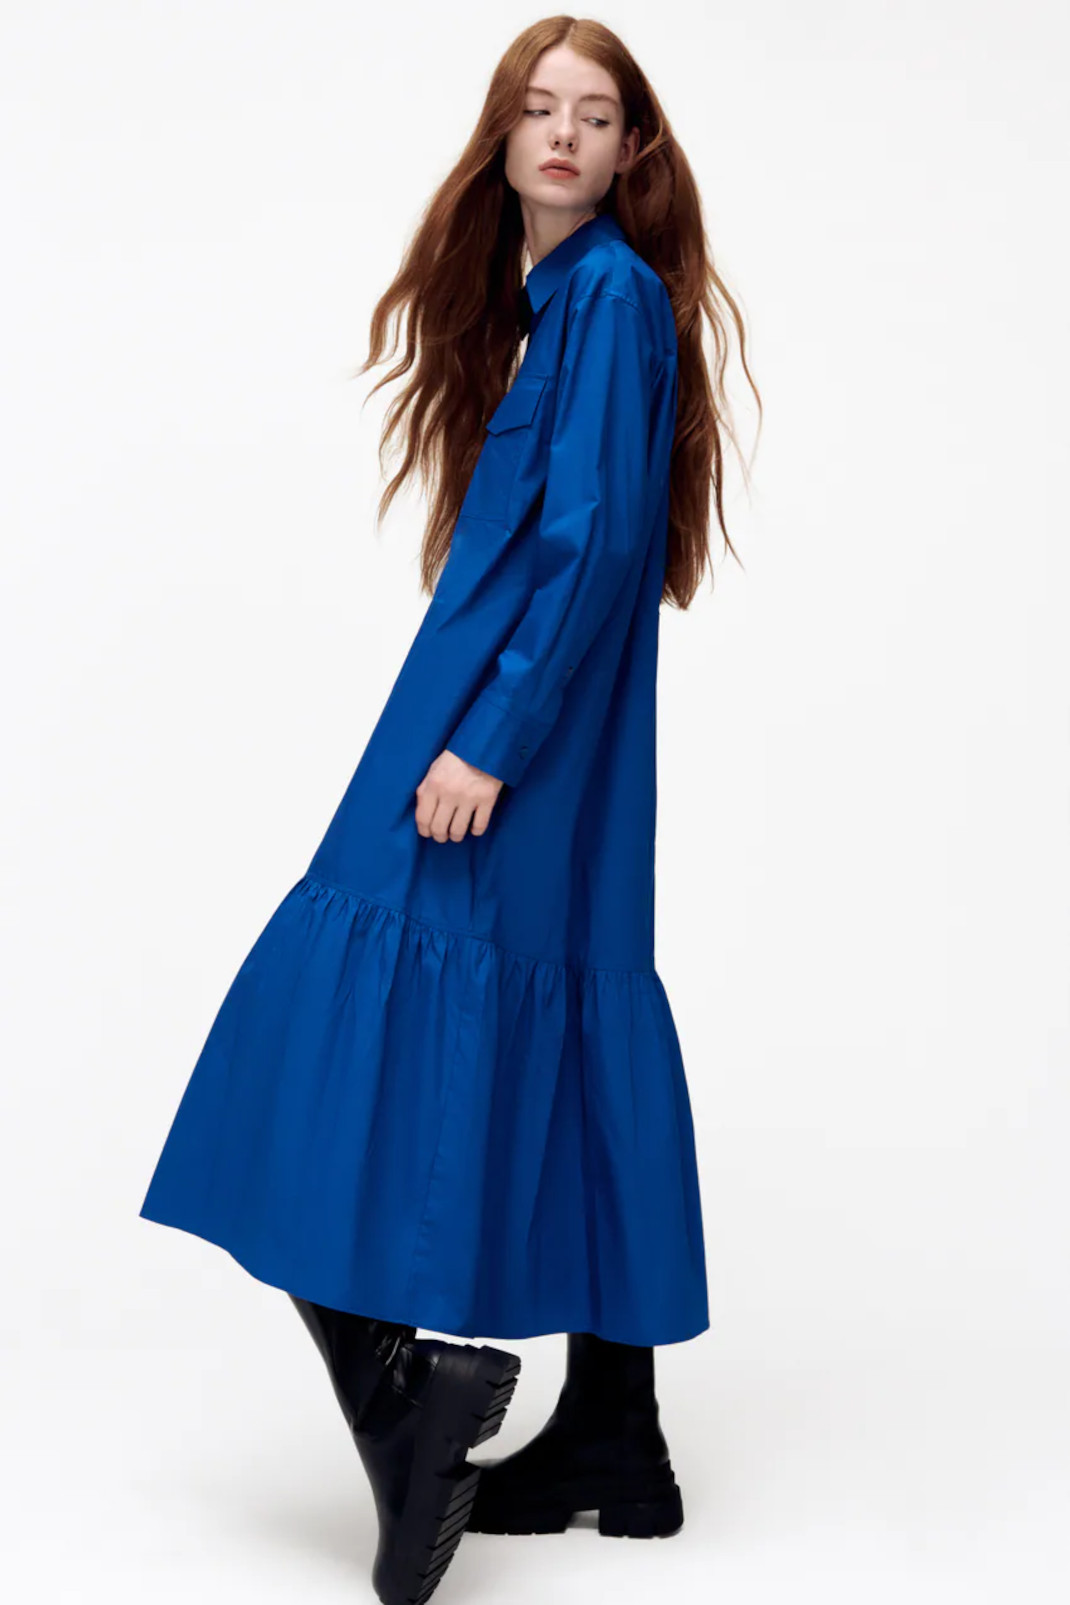 H Δανάη Μπάρκα με στιλάτο φόρεμα από τα Zara  